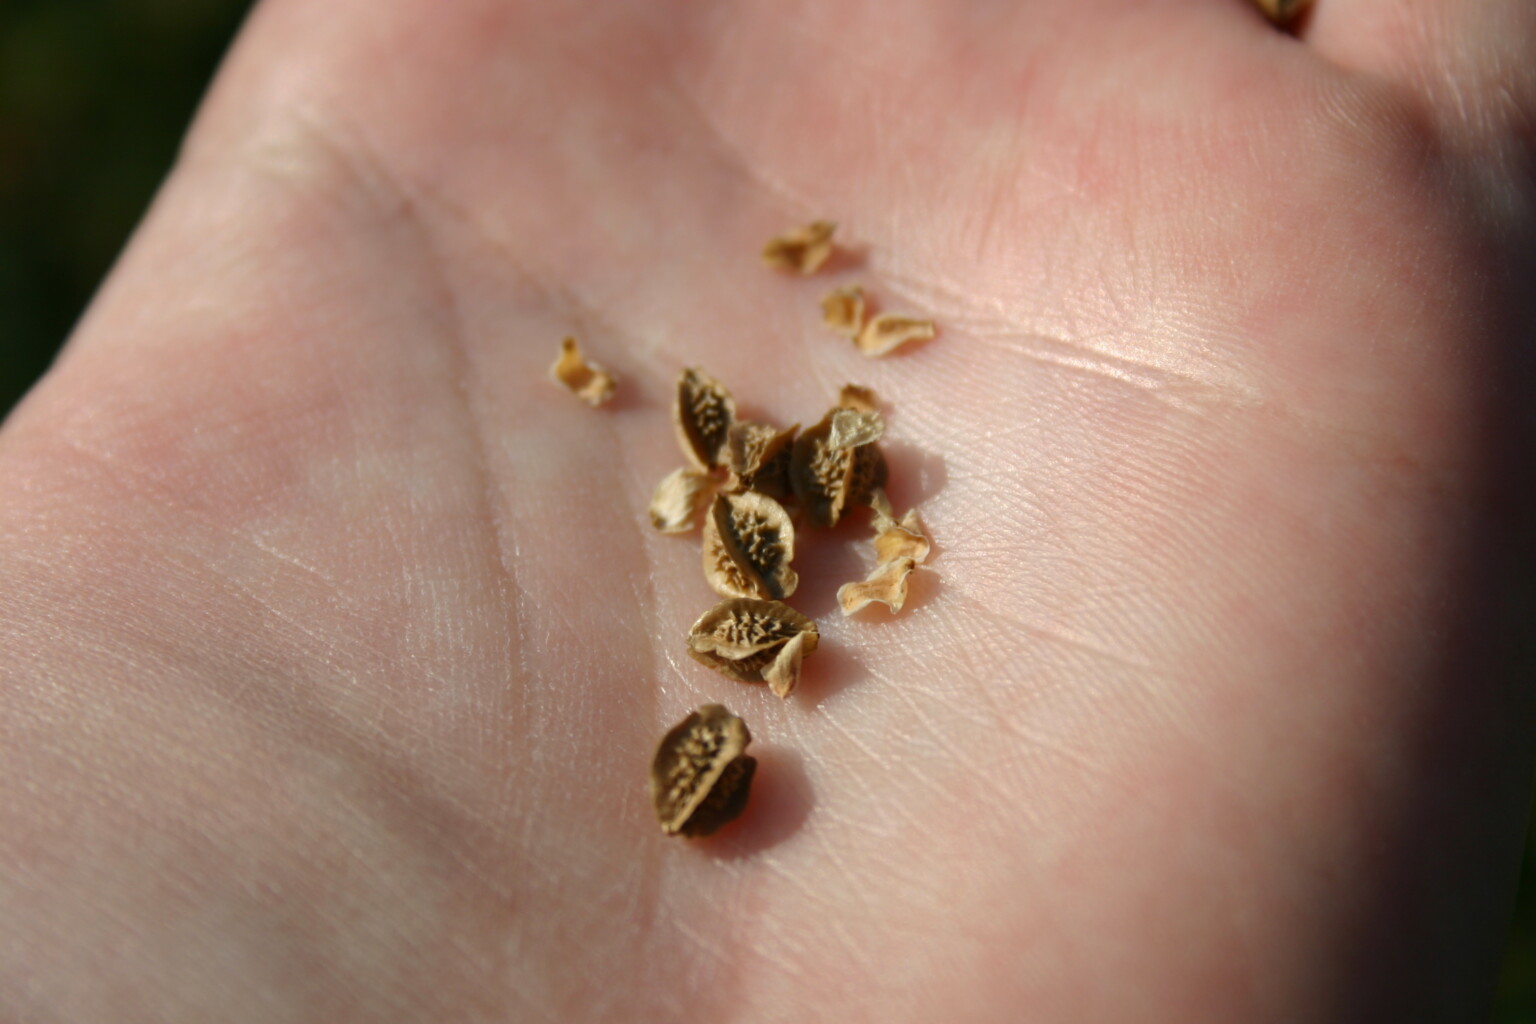 ☺ 100 burnet seeds 